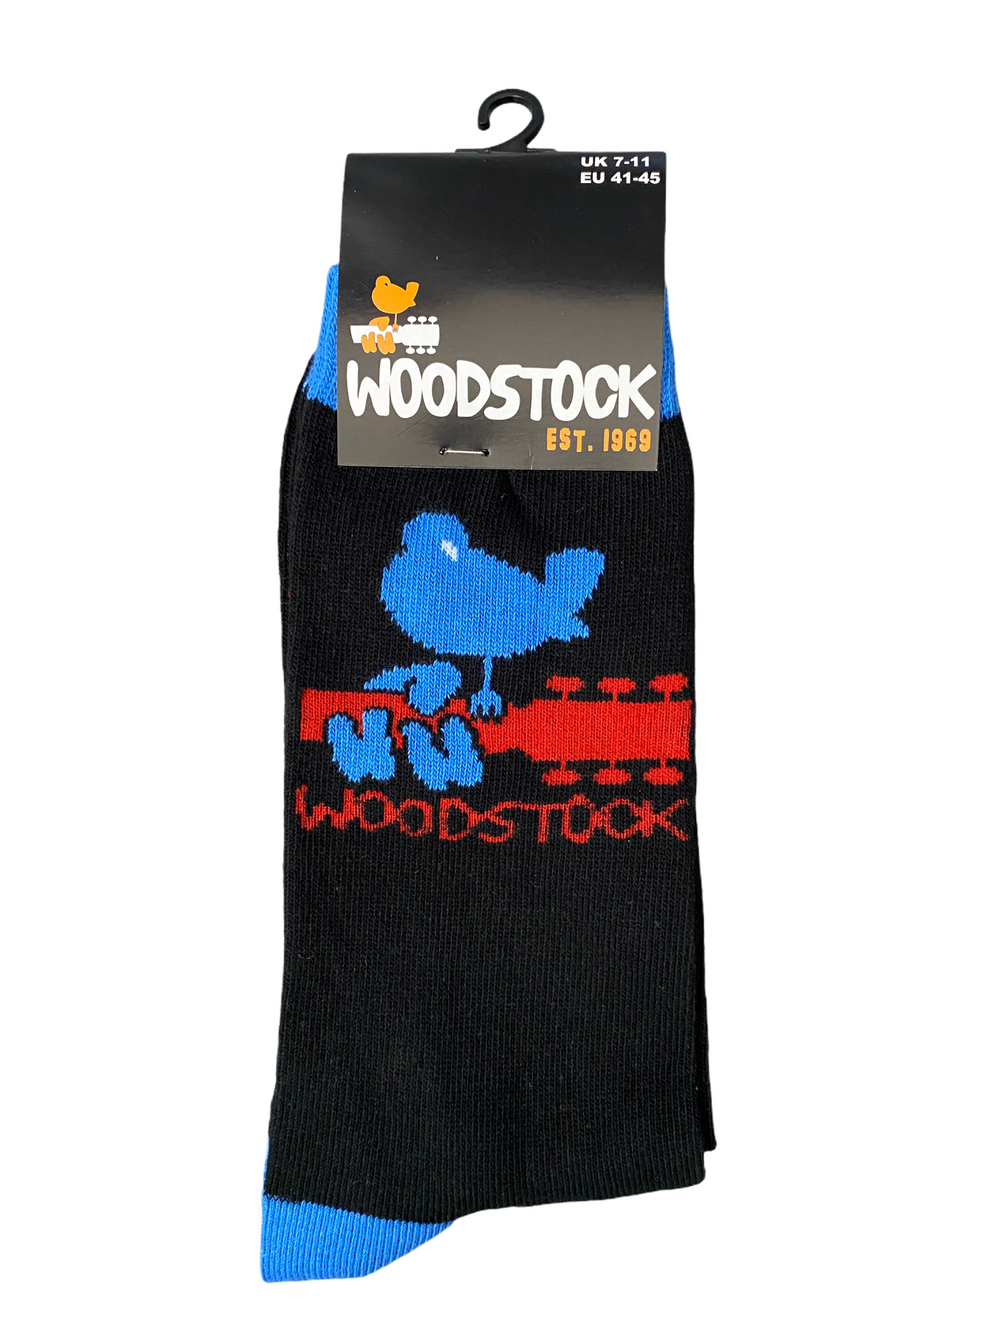 Woodstock Festival Official Product 1 Pair Jacquard Socks Size 7-11 UK Brand New